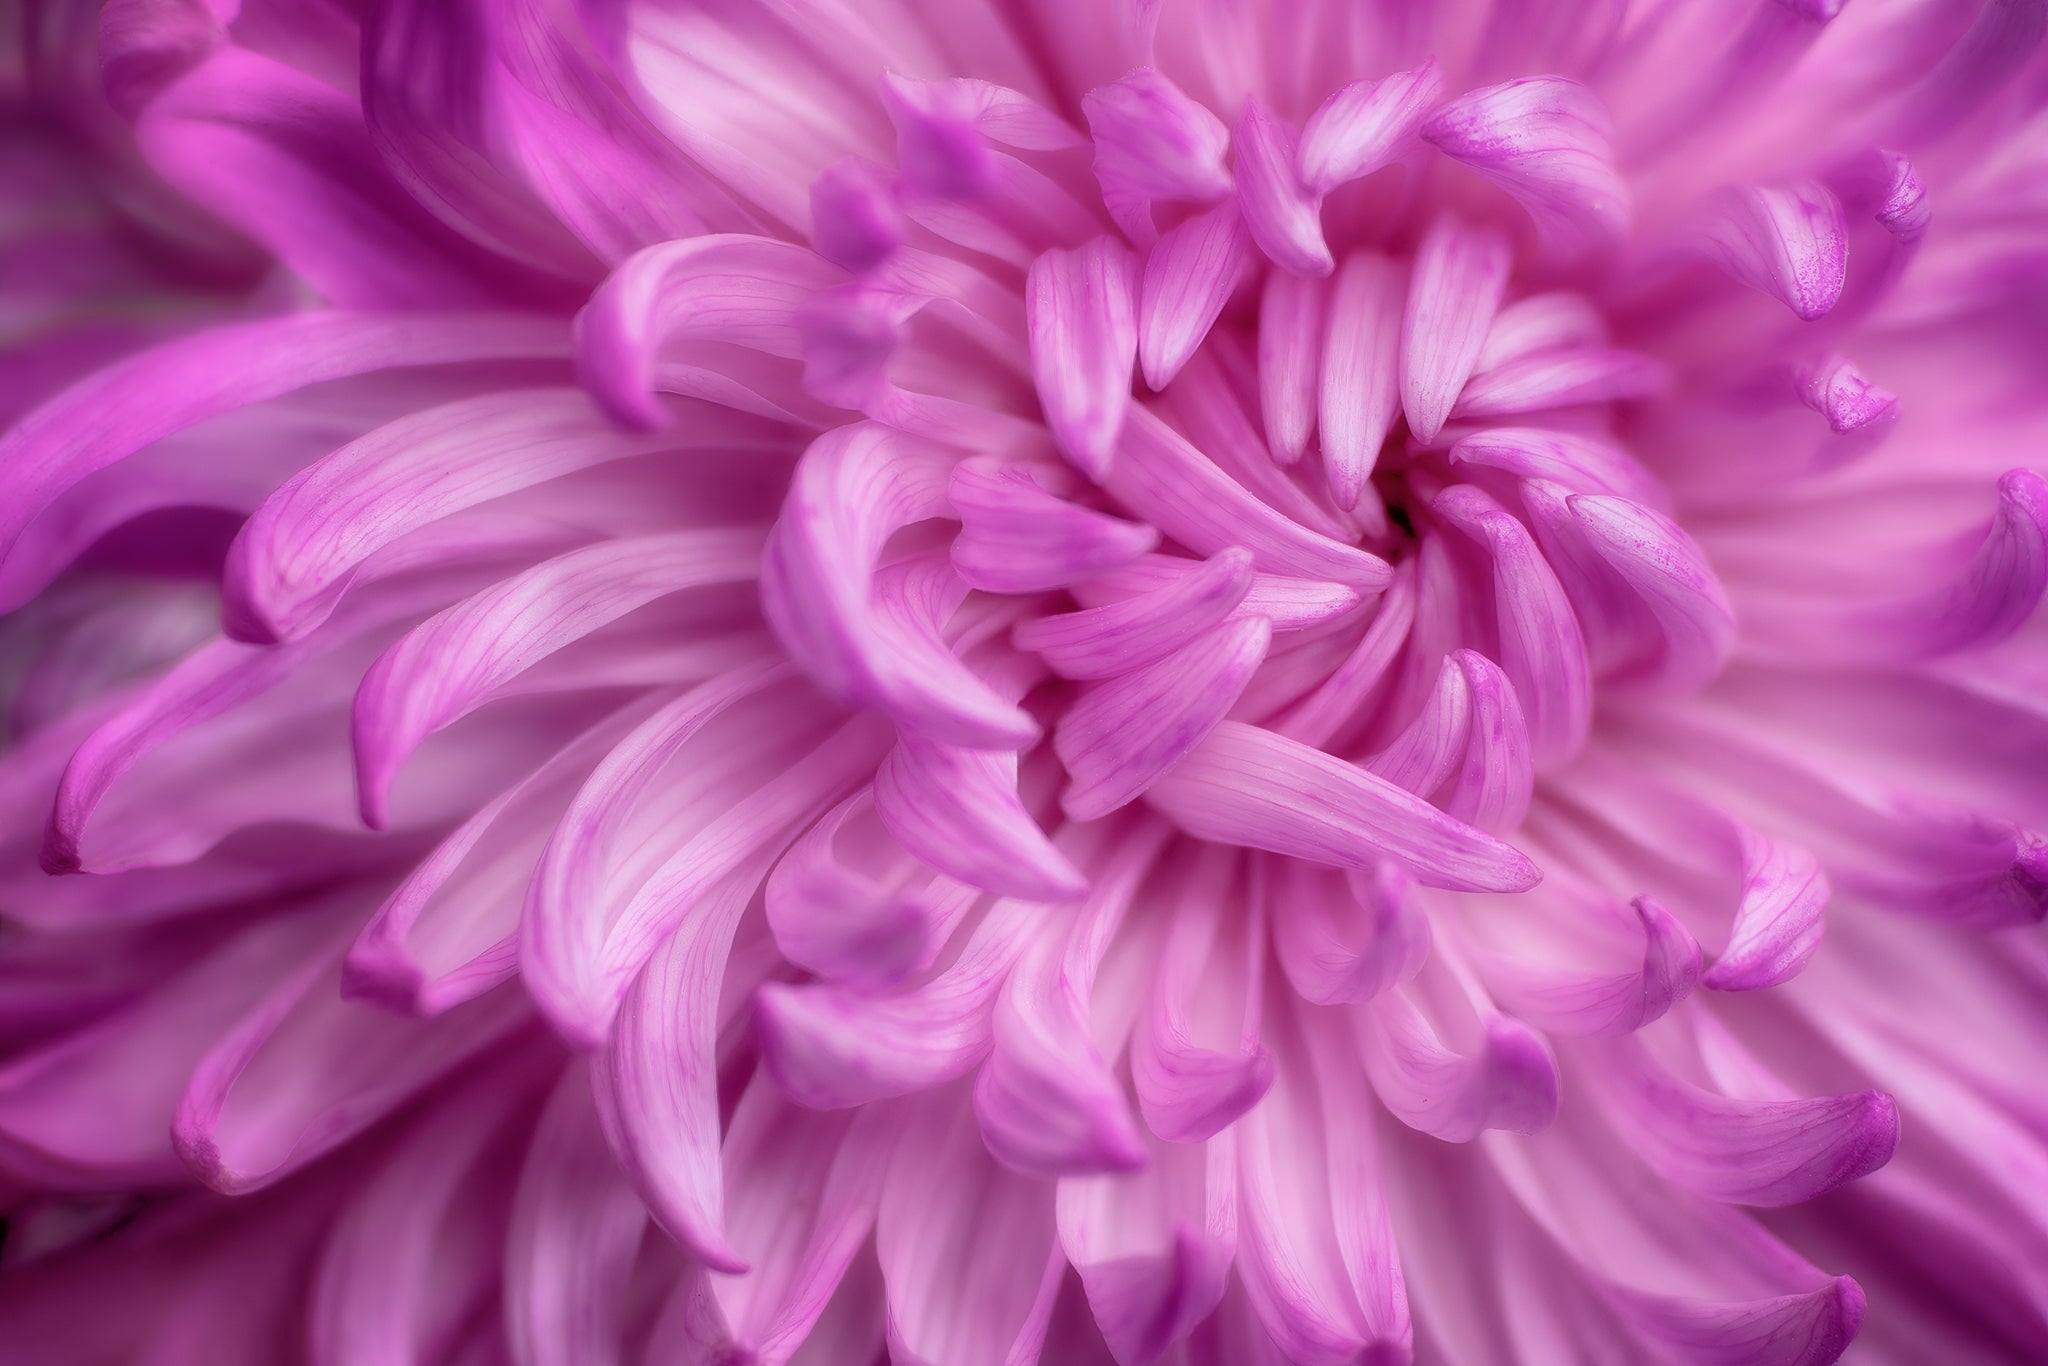 Fine art photograph of pink Chrysanthemum flower titled "Self Love" by Cameron Dreaux of Dreaux Fine Art. 